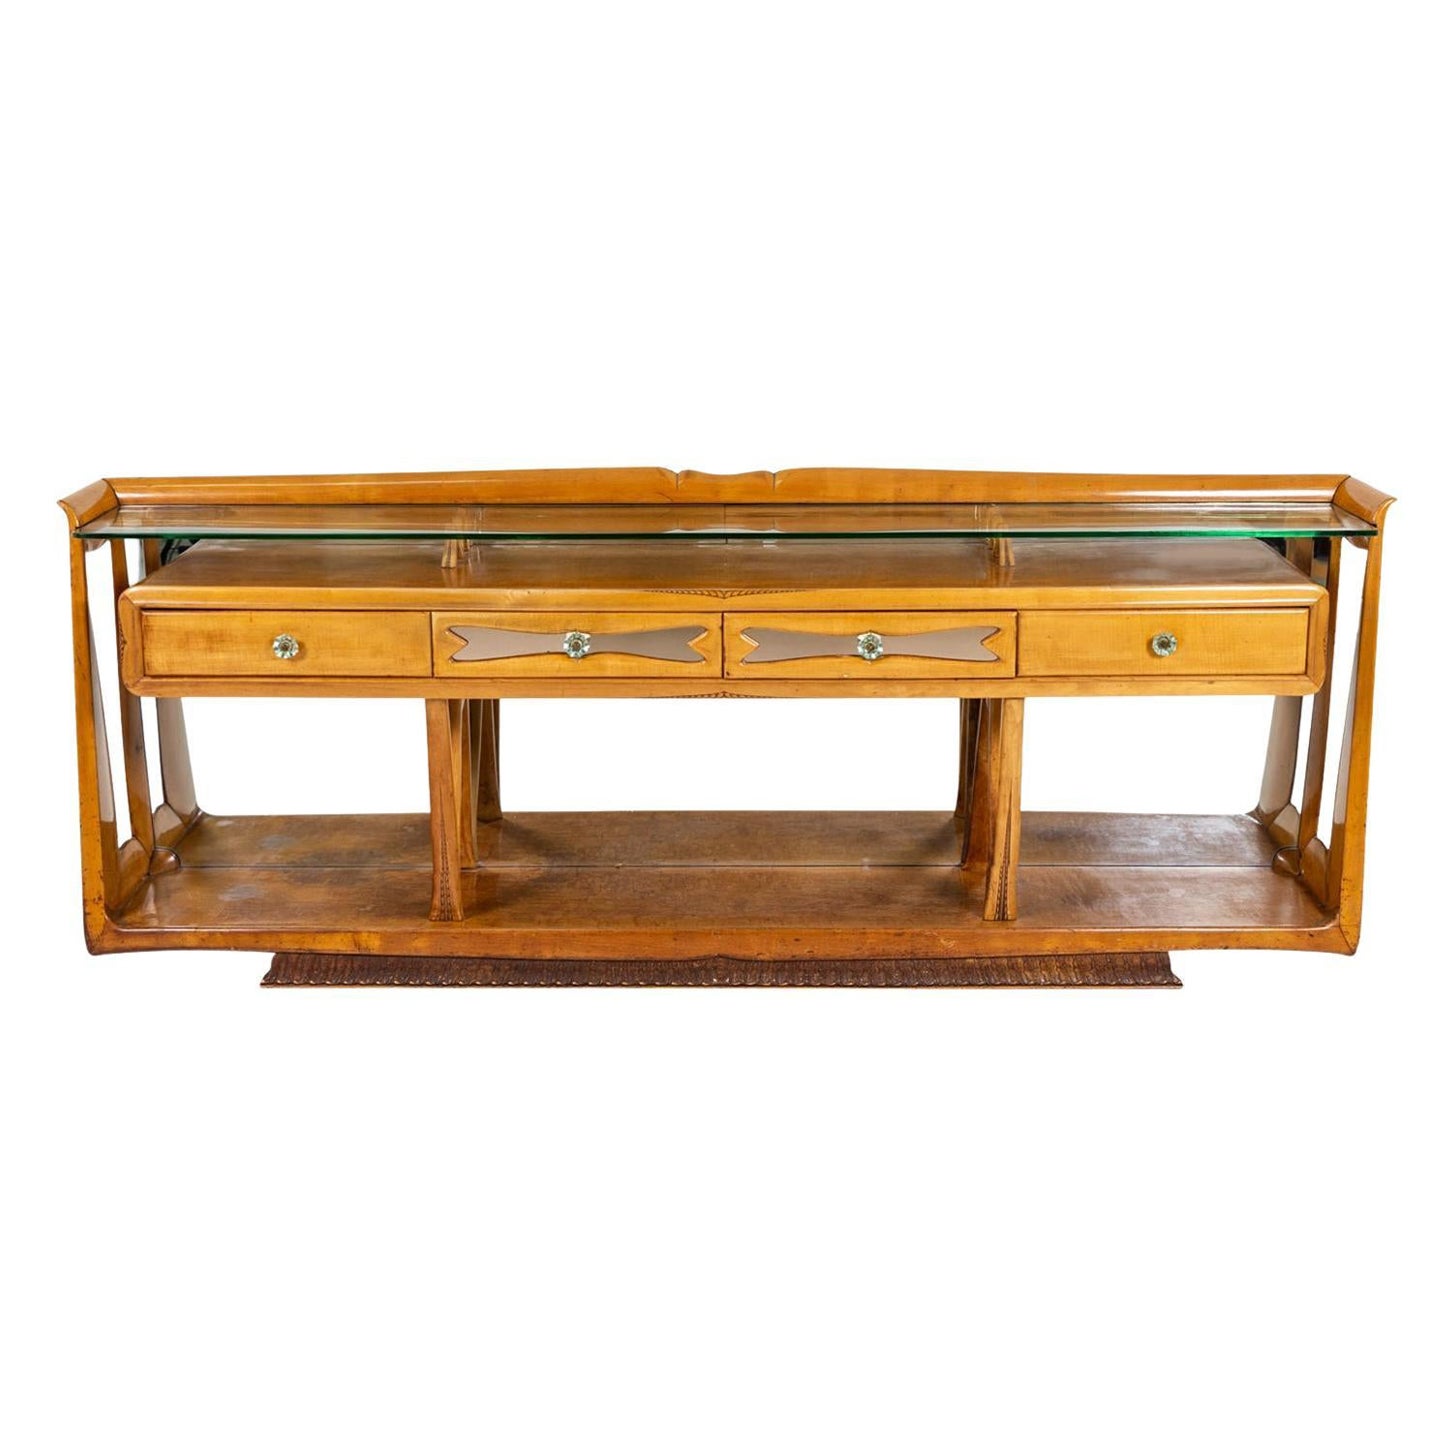 20th Century Italian Modern Maplewood Sideboard - Vintage Walnut Credenza For Sale